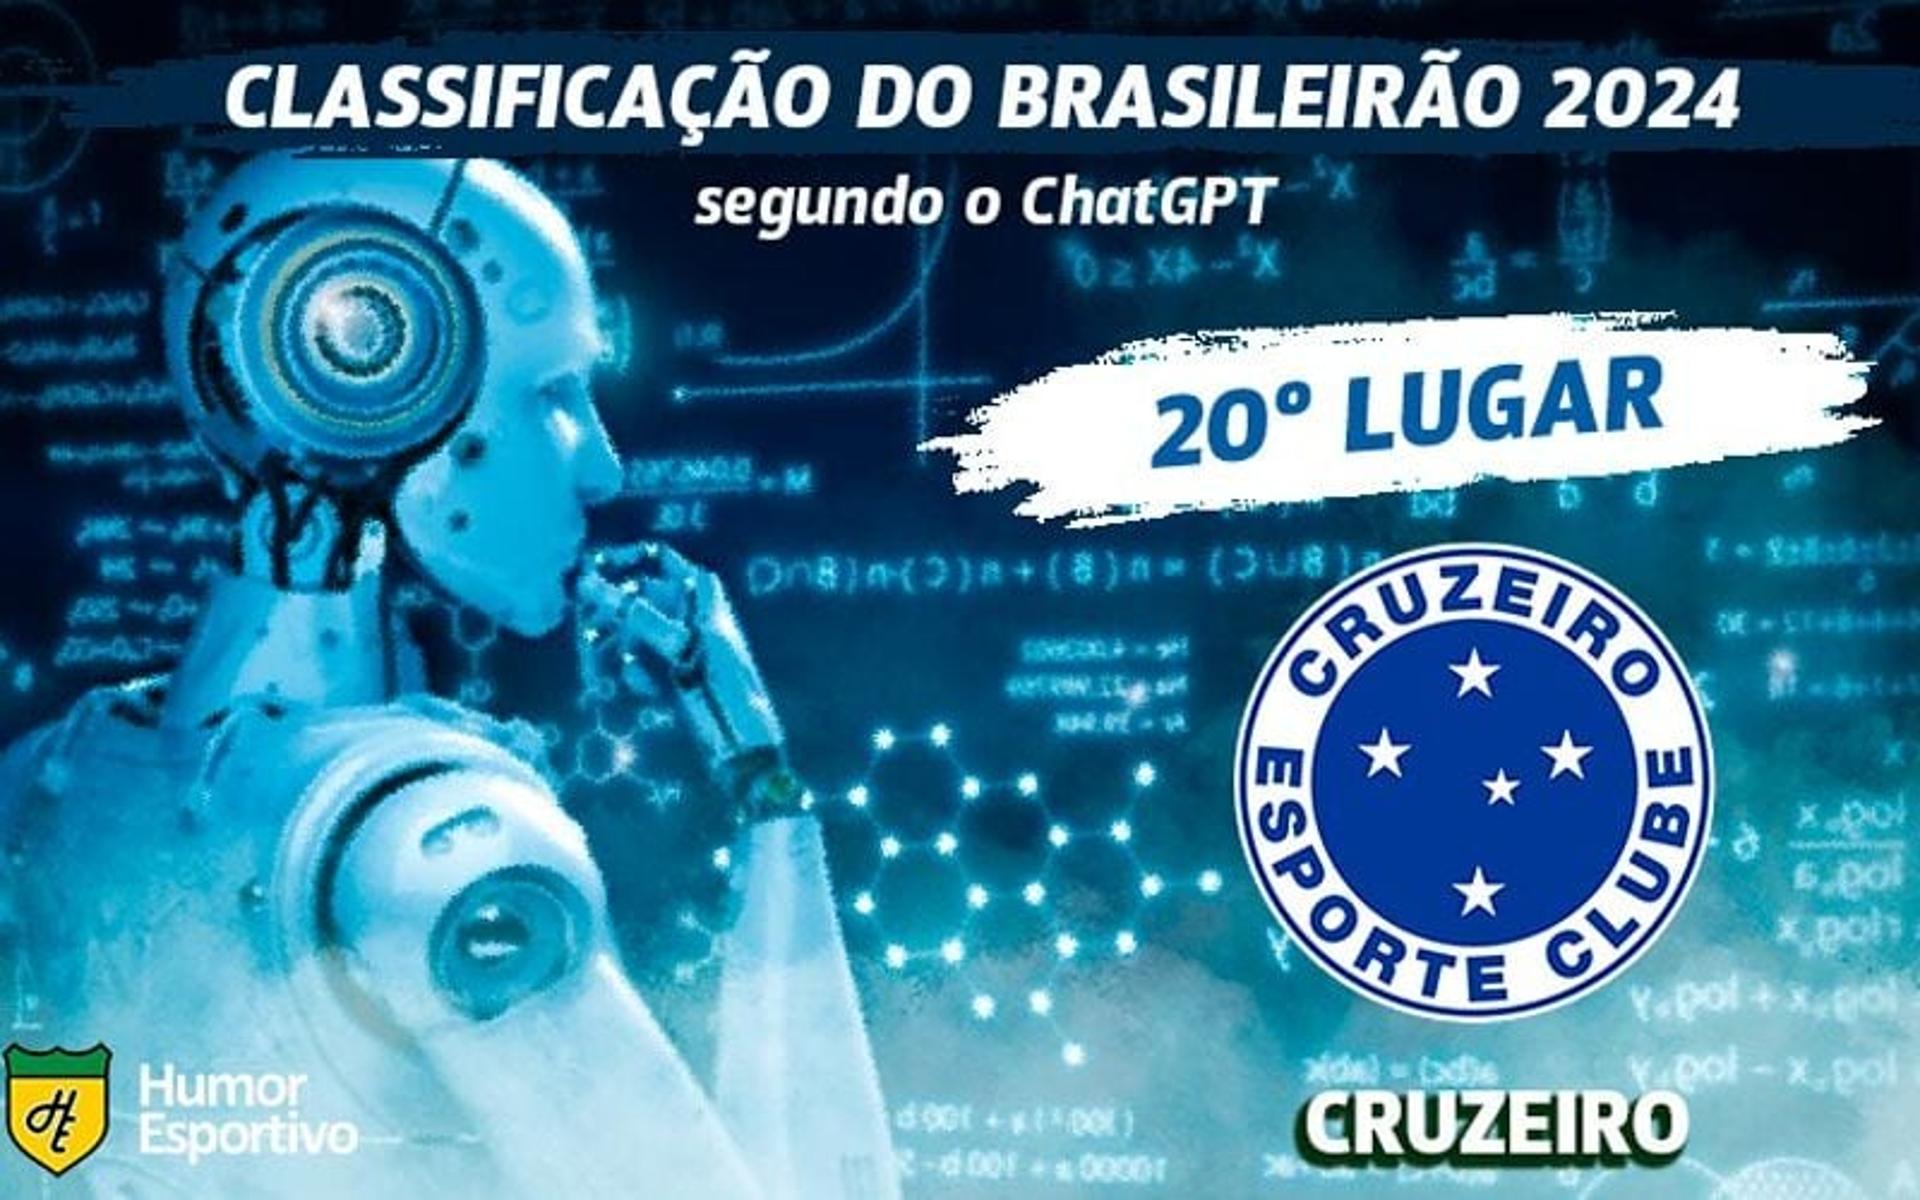 1.-Cruzeiro-aspect-ratio-512-320